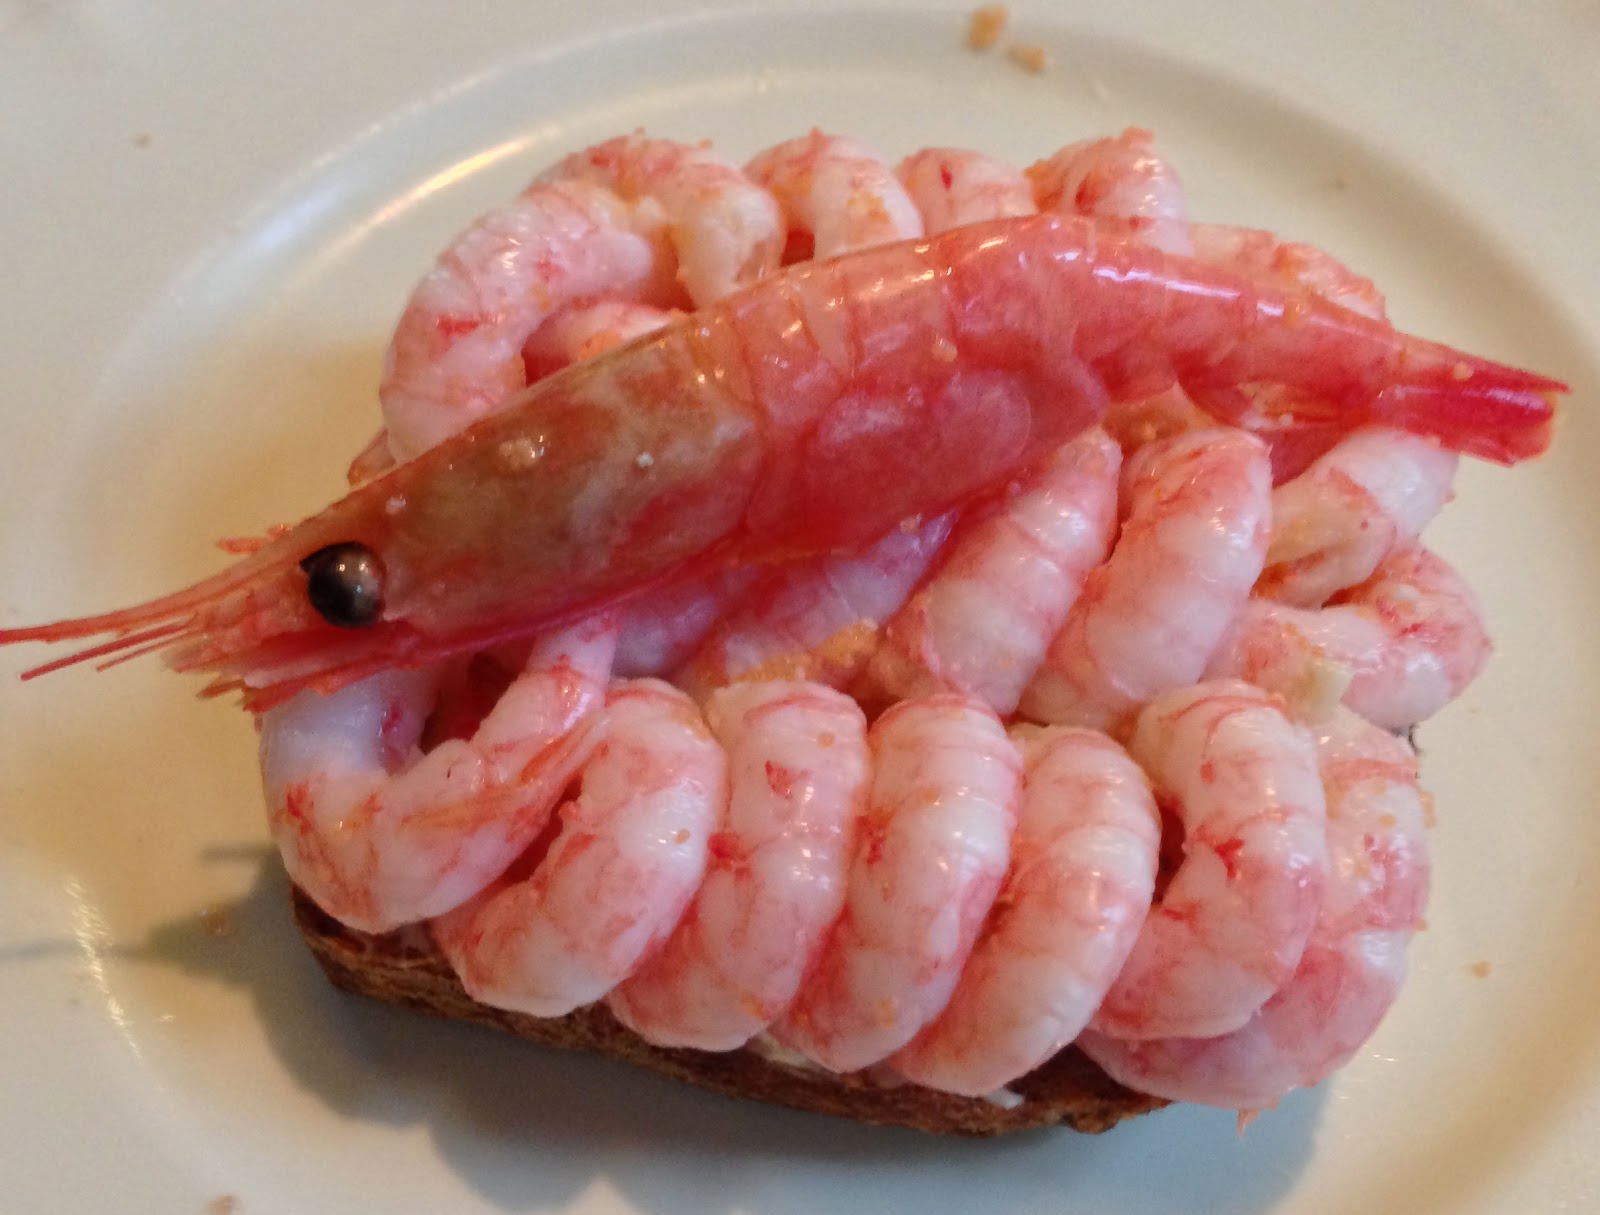 Prawn, Shrimp or Scampi for dinner.